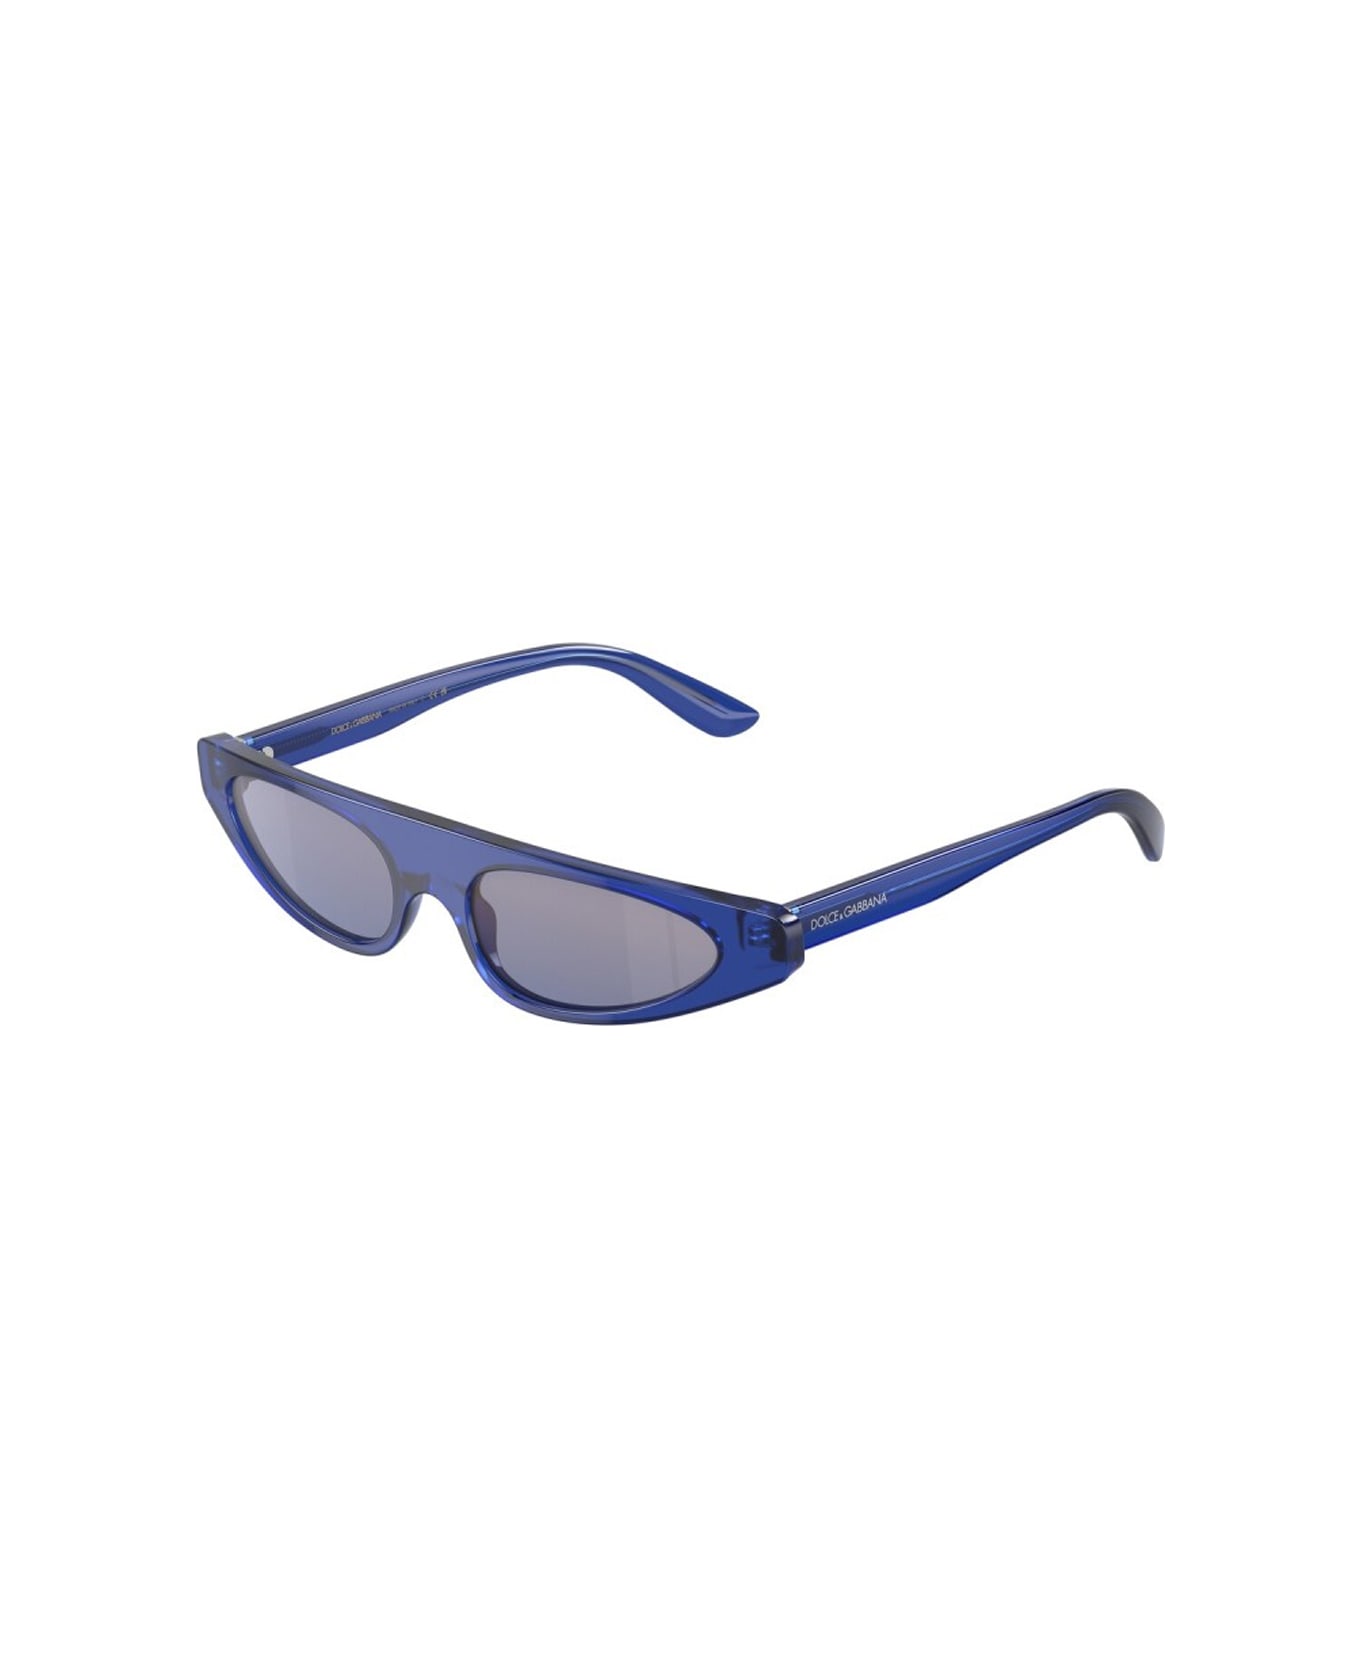 Dolce & Gabbana Eyewear Dg4442 339833 Sunglasses - Blu サングラス